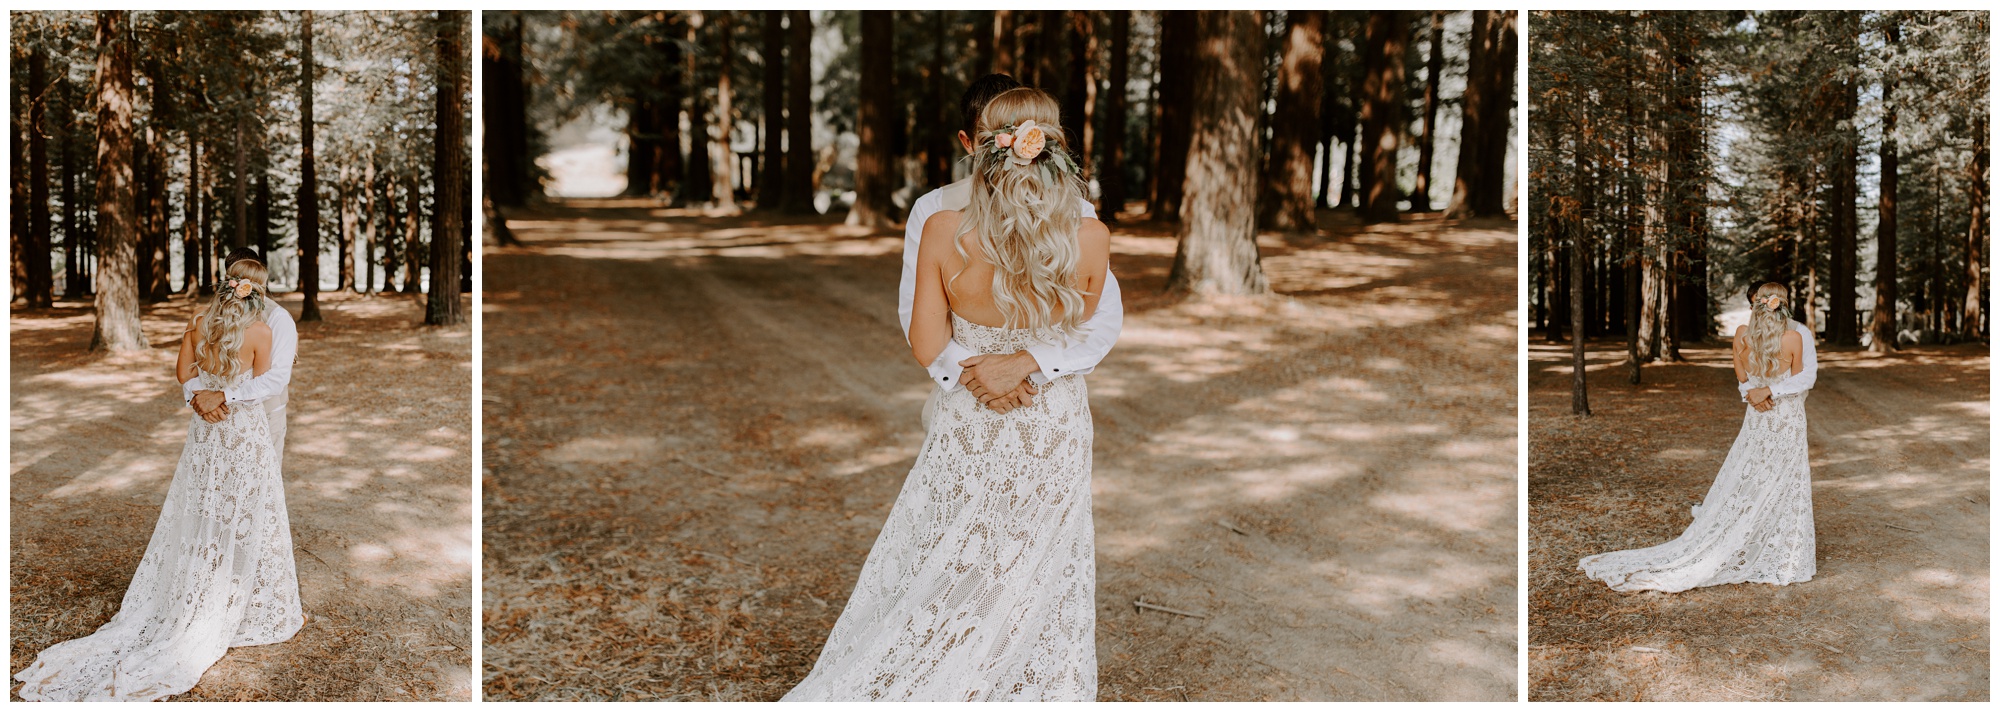 Redwood Festival Wedding Humbolt California - Jessica Heron Images_0011.jpg